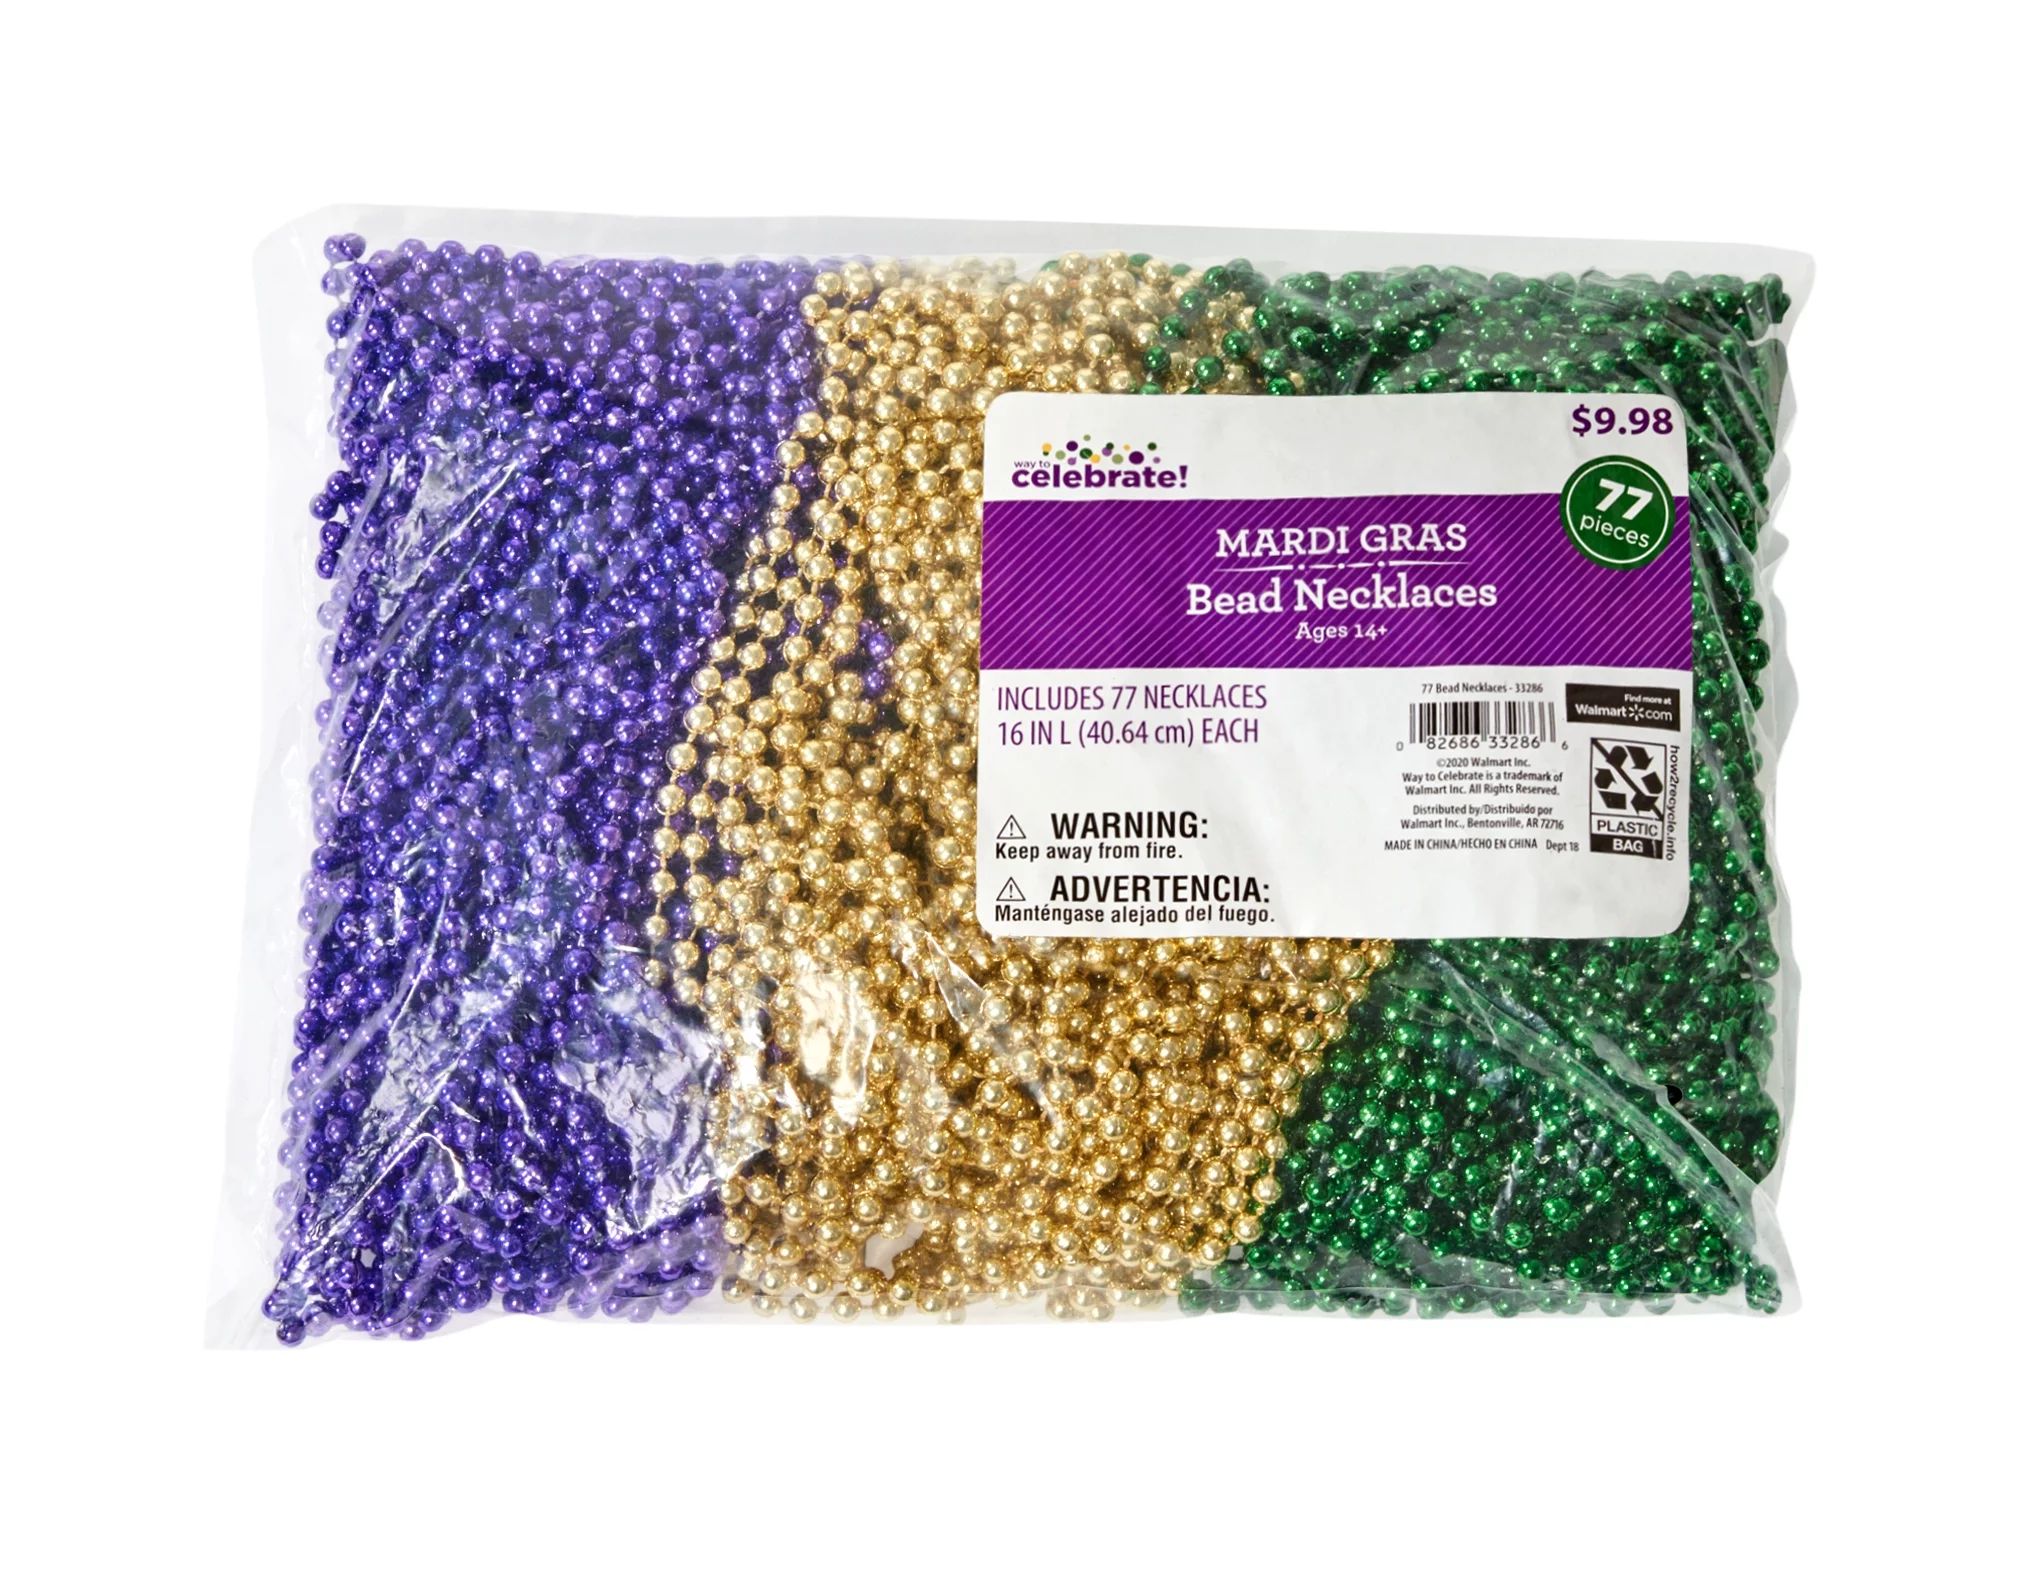 Madri Gras Way to Celebrate 77CT Bead Necklaces | Walmart (US)